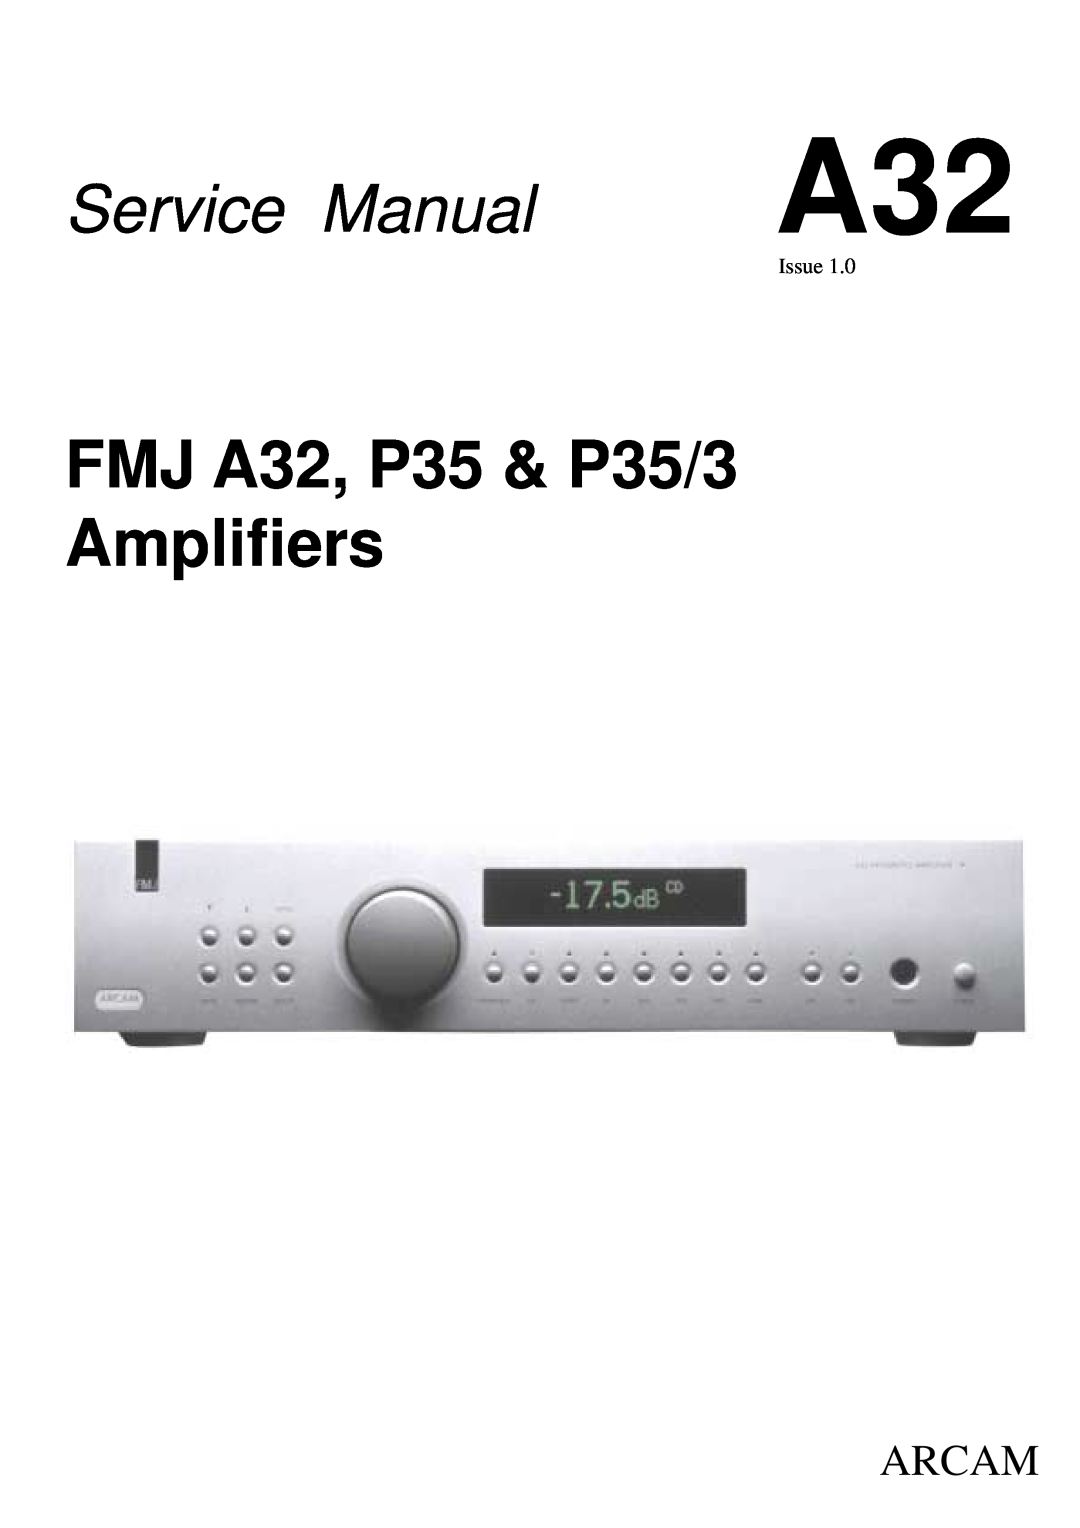 Arcam manual Integrated Amplifier A32 Power Amplifier P35 